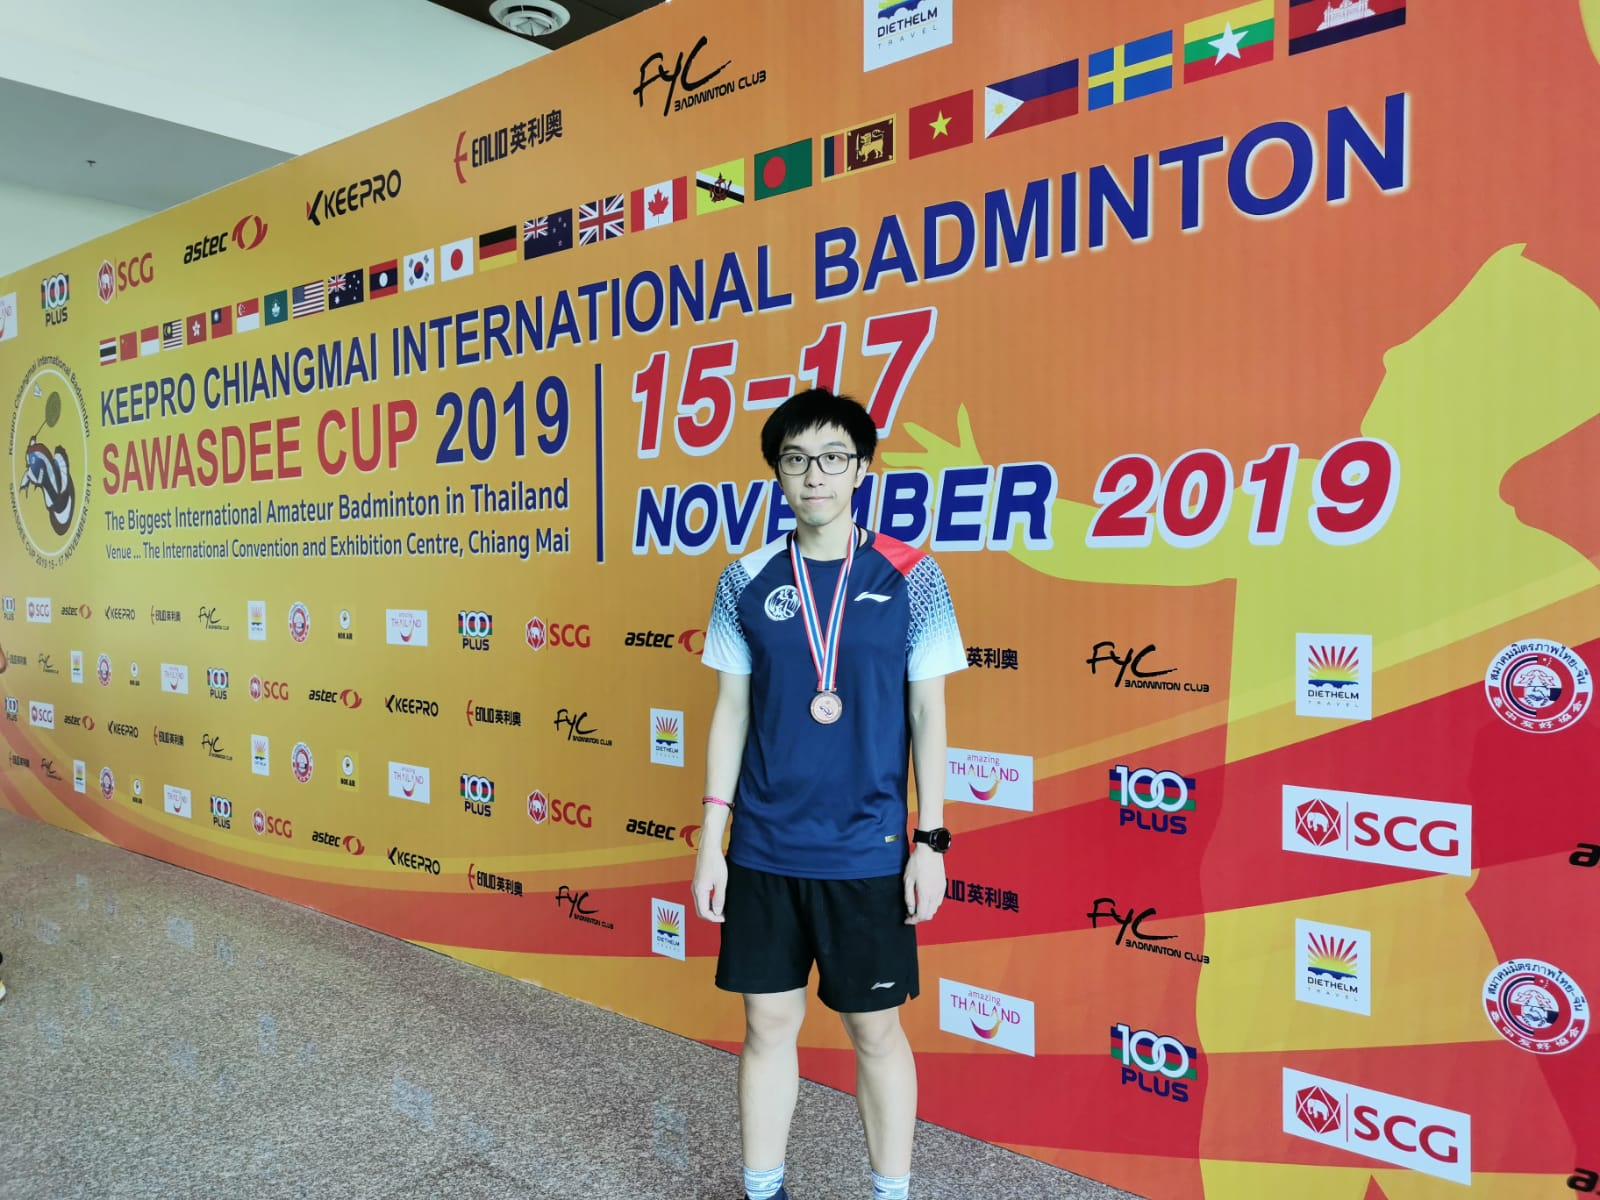 Keepro Chiangmai International Badminton Sawasdee Cup 2019 混合雙打 季軍 